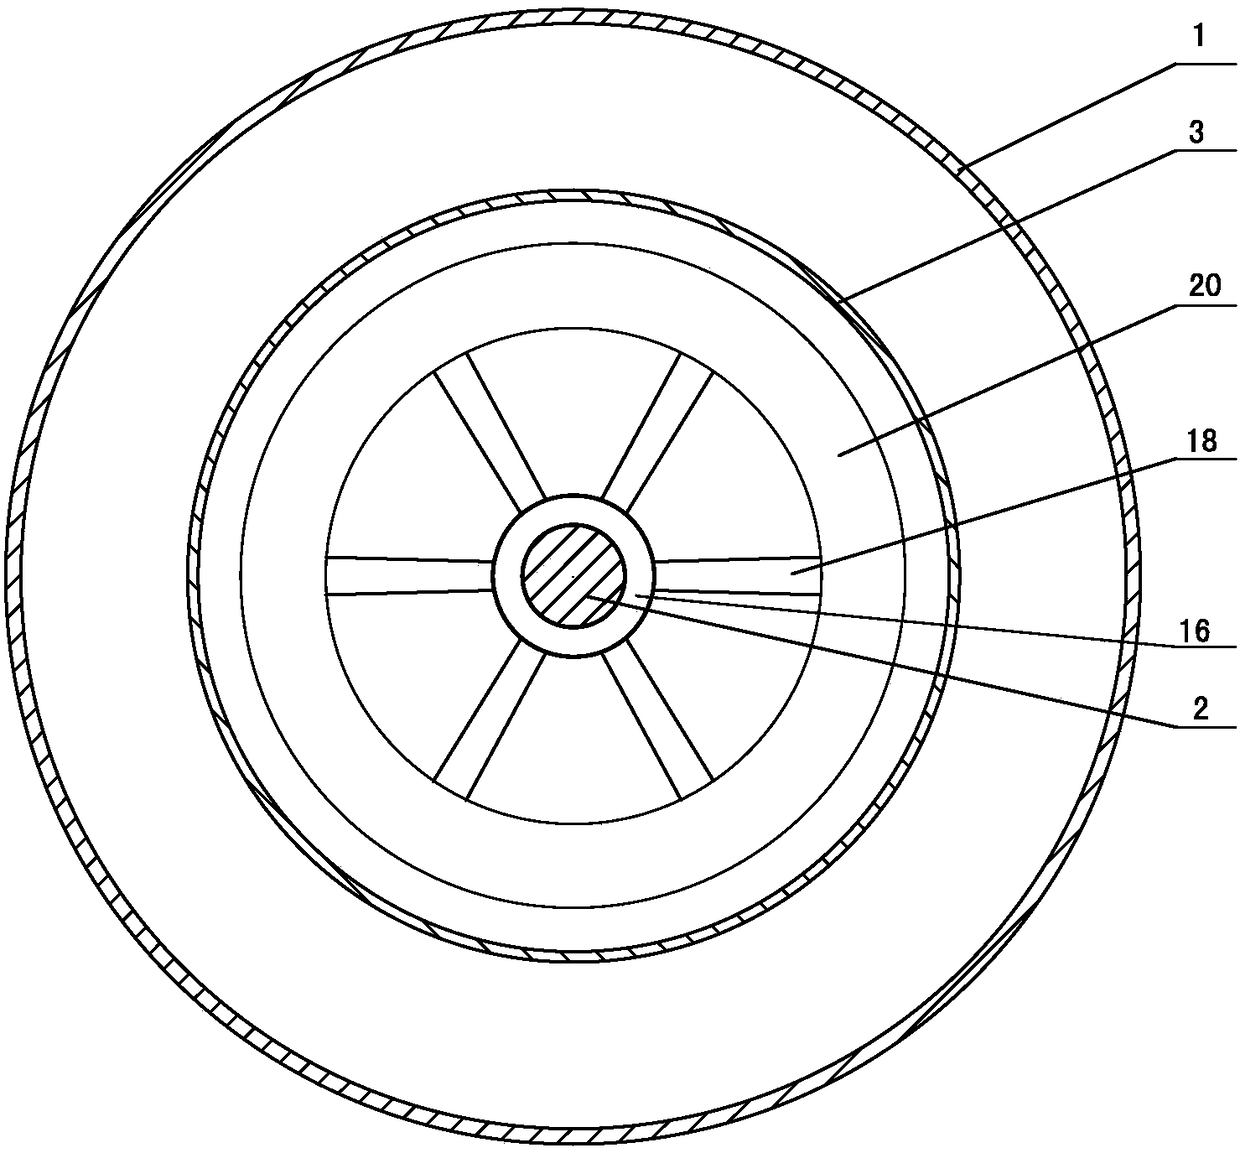 Hub motor driving wheel provided with brake device